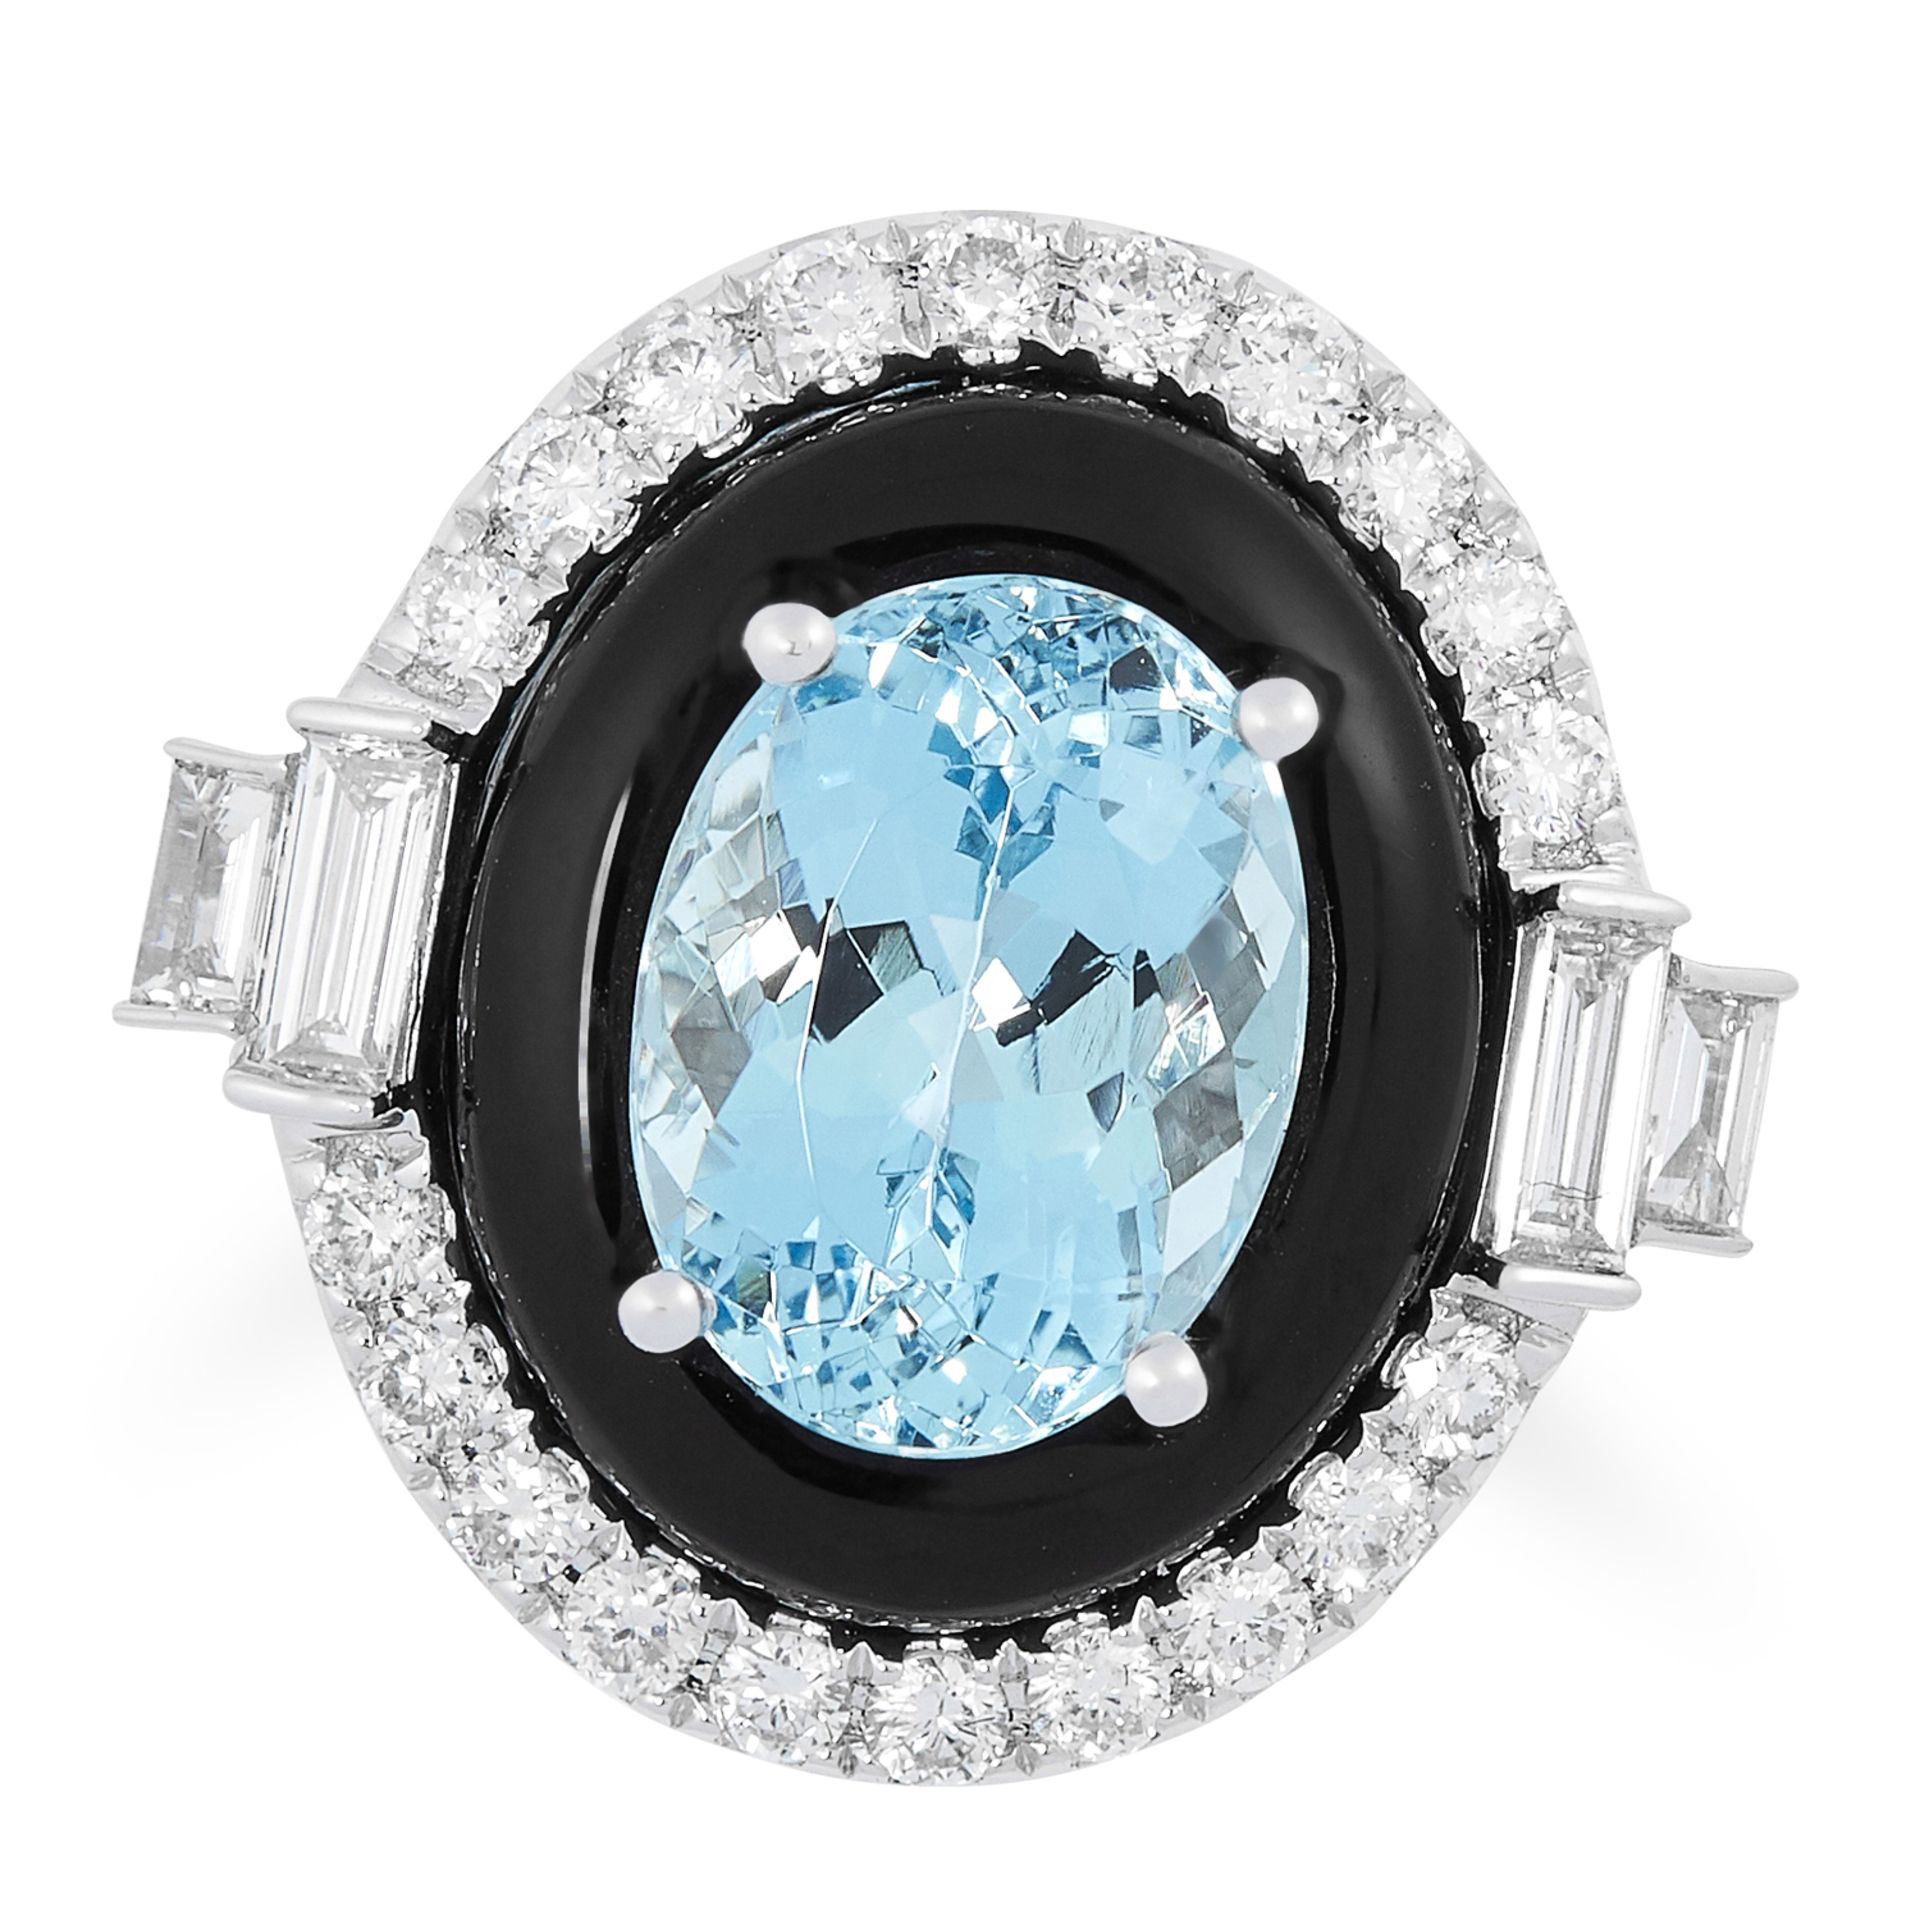 AN AQUAMARINE, ONYX AND DIAMOND DRESS RING set with an oval mixed cut aquamarine of 2.81 carats,